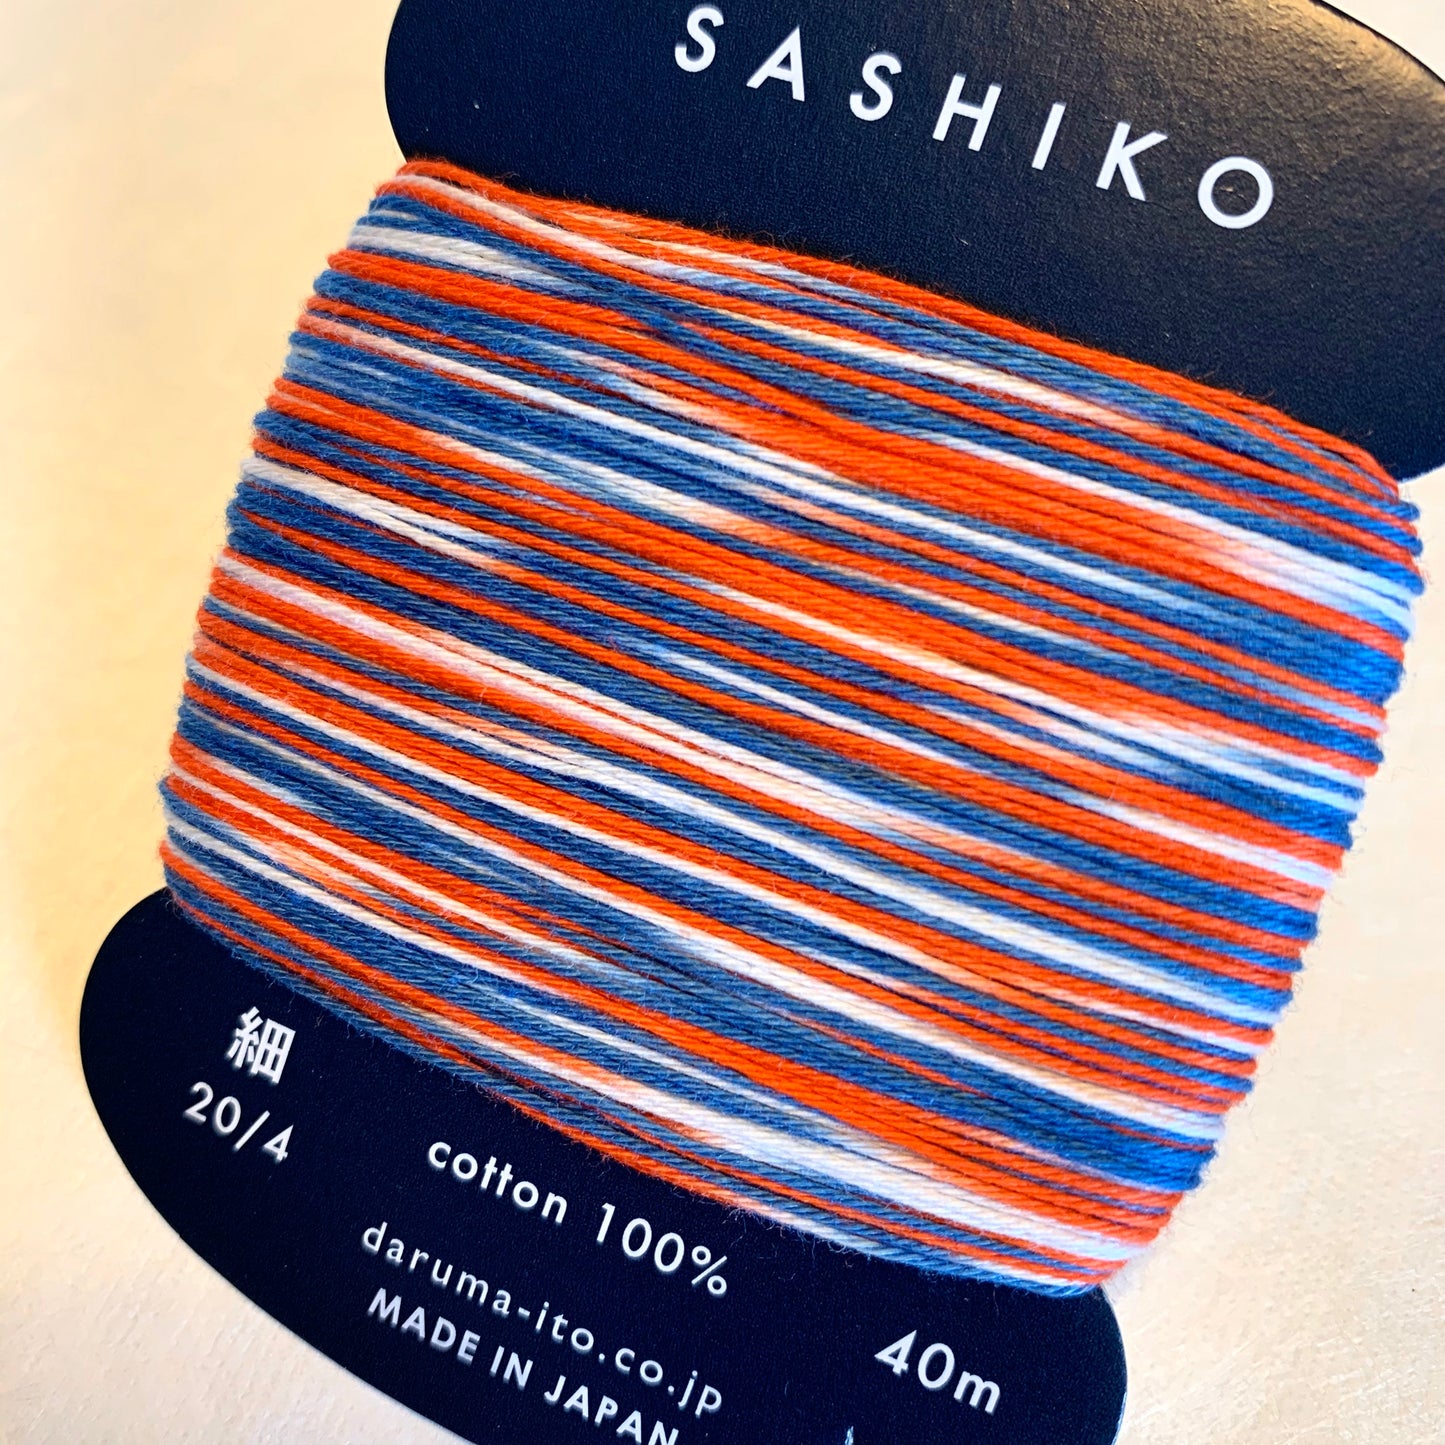 Daruma #401 "GOLDFISH SCOOPING" red white and blue Japanese Cotton SASHIKO thread 40 meter skein 20/4